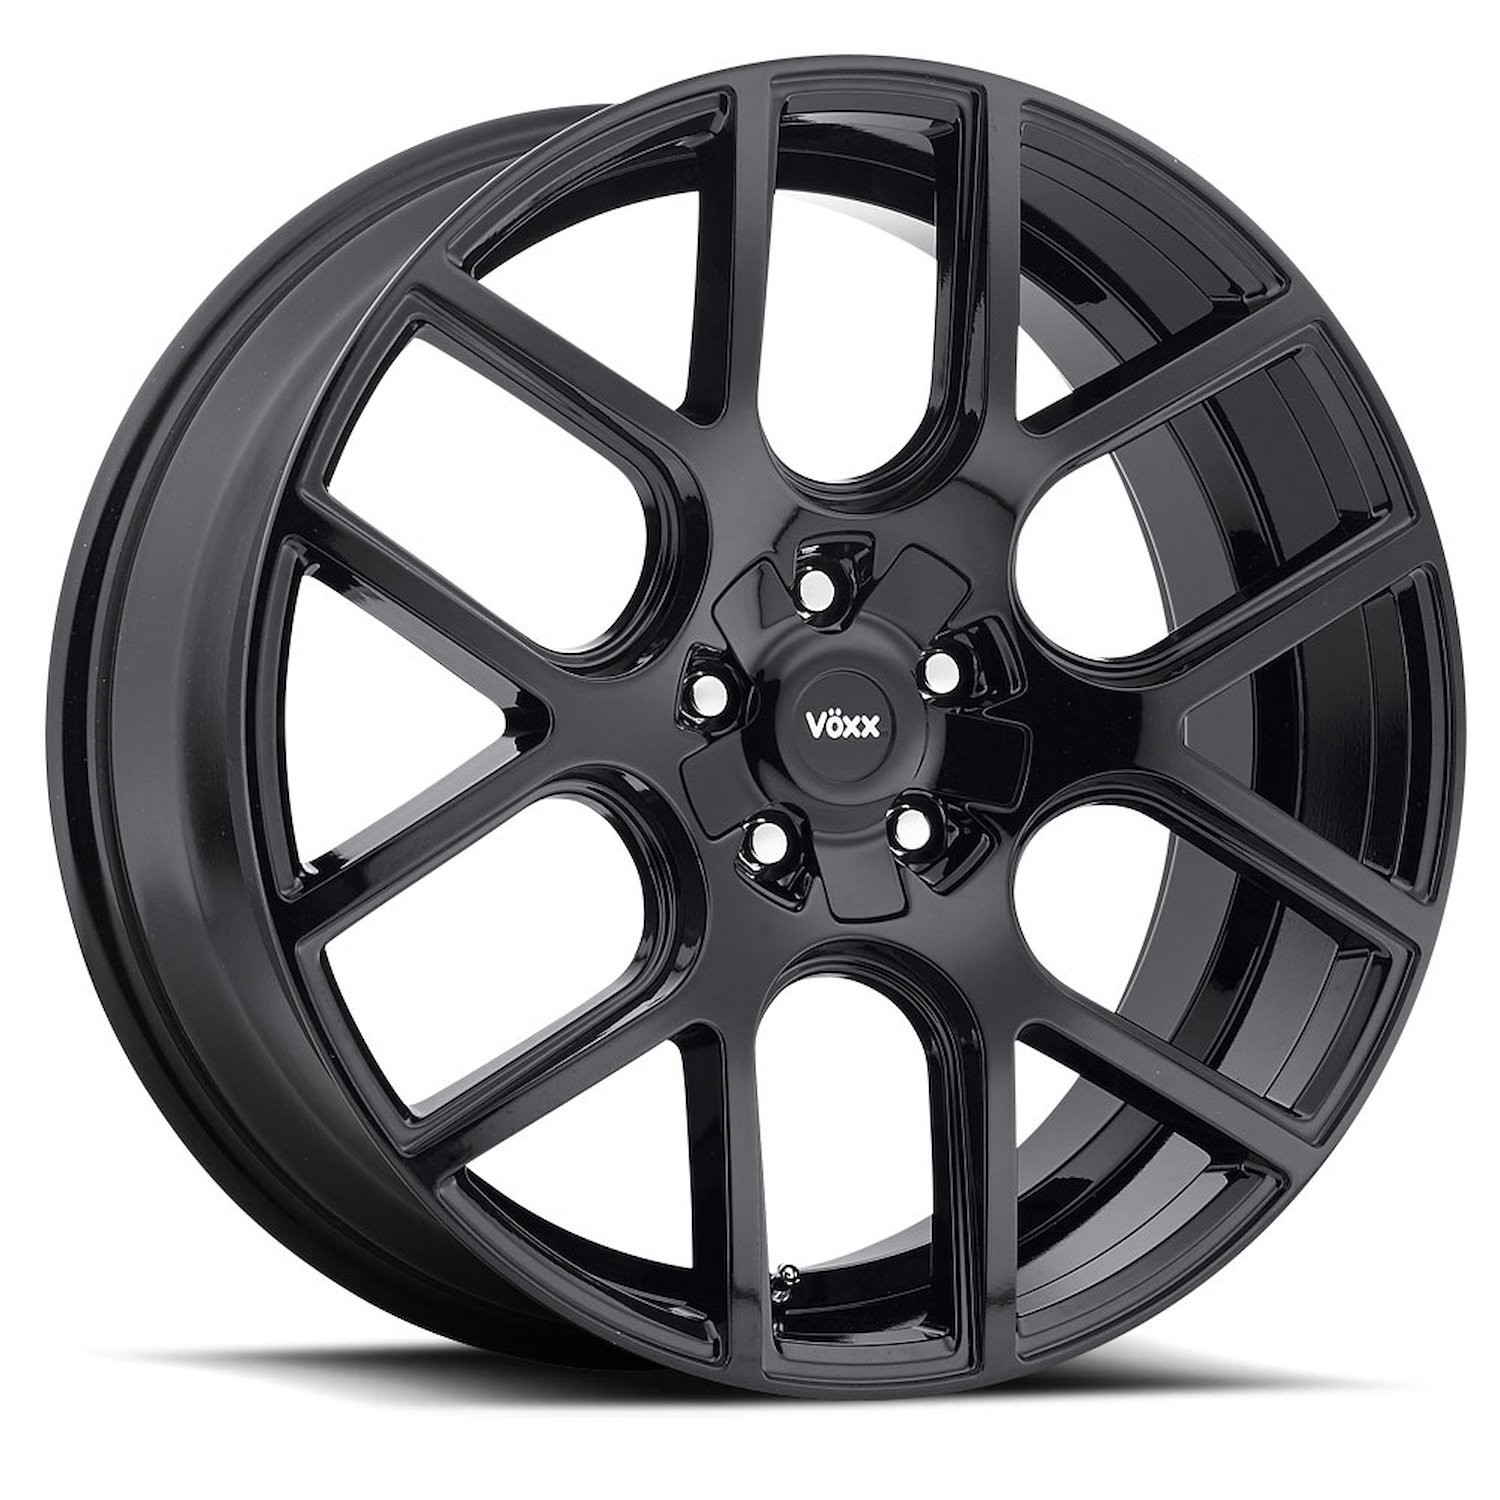 LAG 775-5003-40 GB Lago Wheel [Size: 17" x 7.50"] Finish: Gloss Black